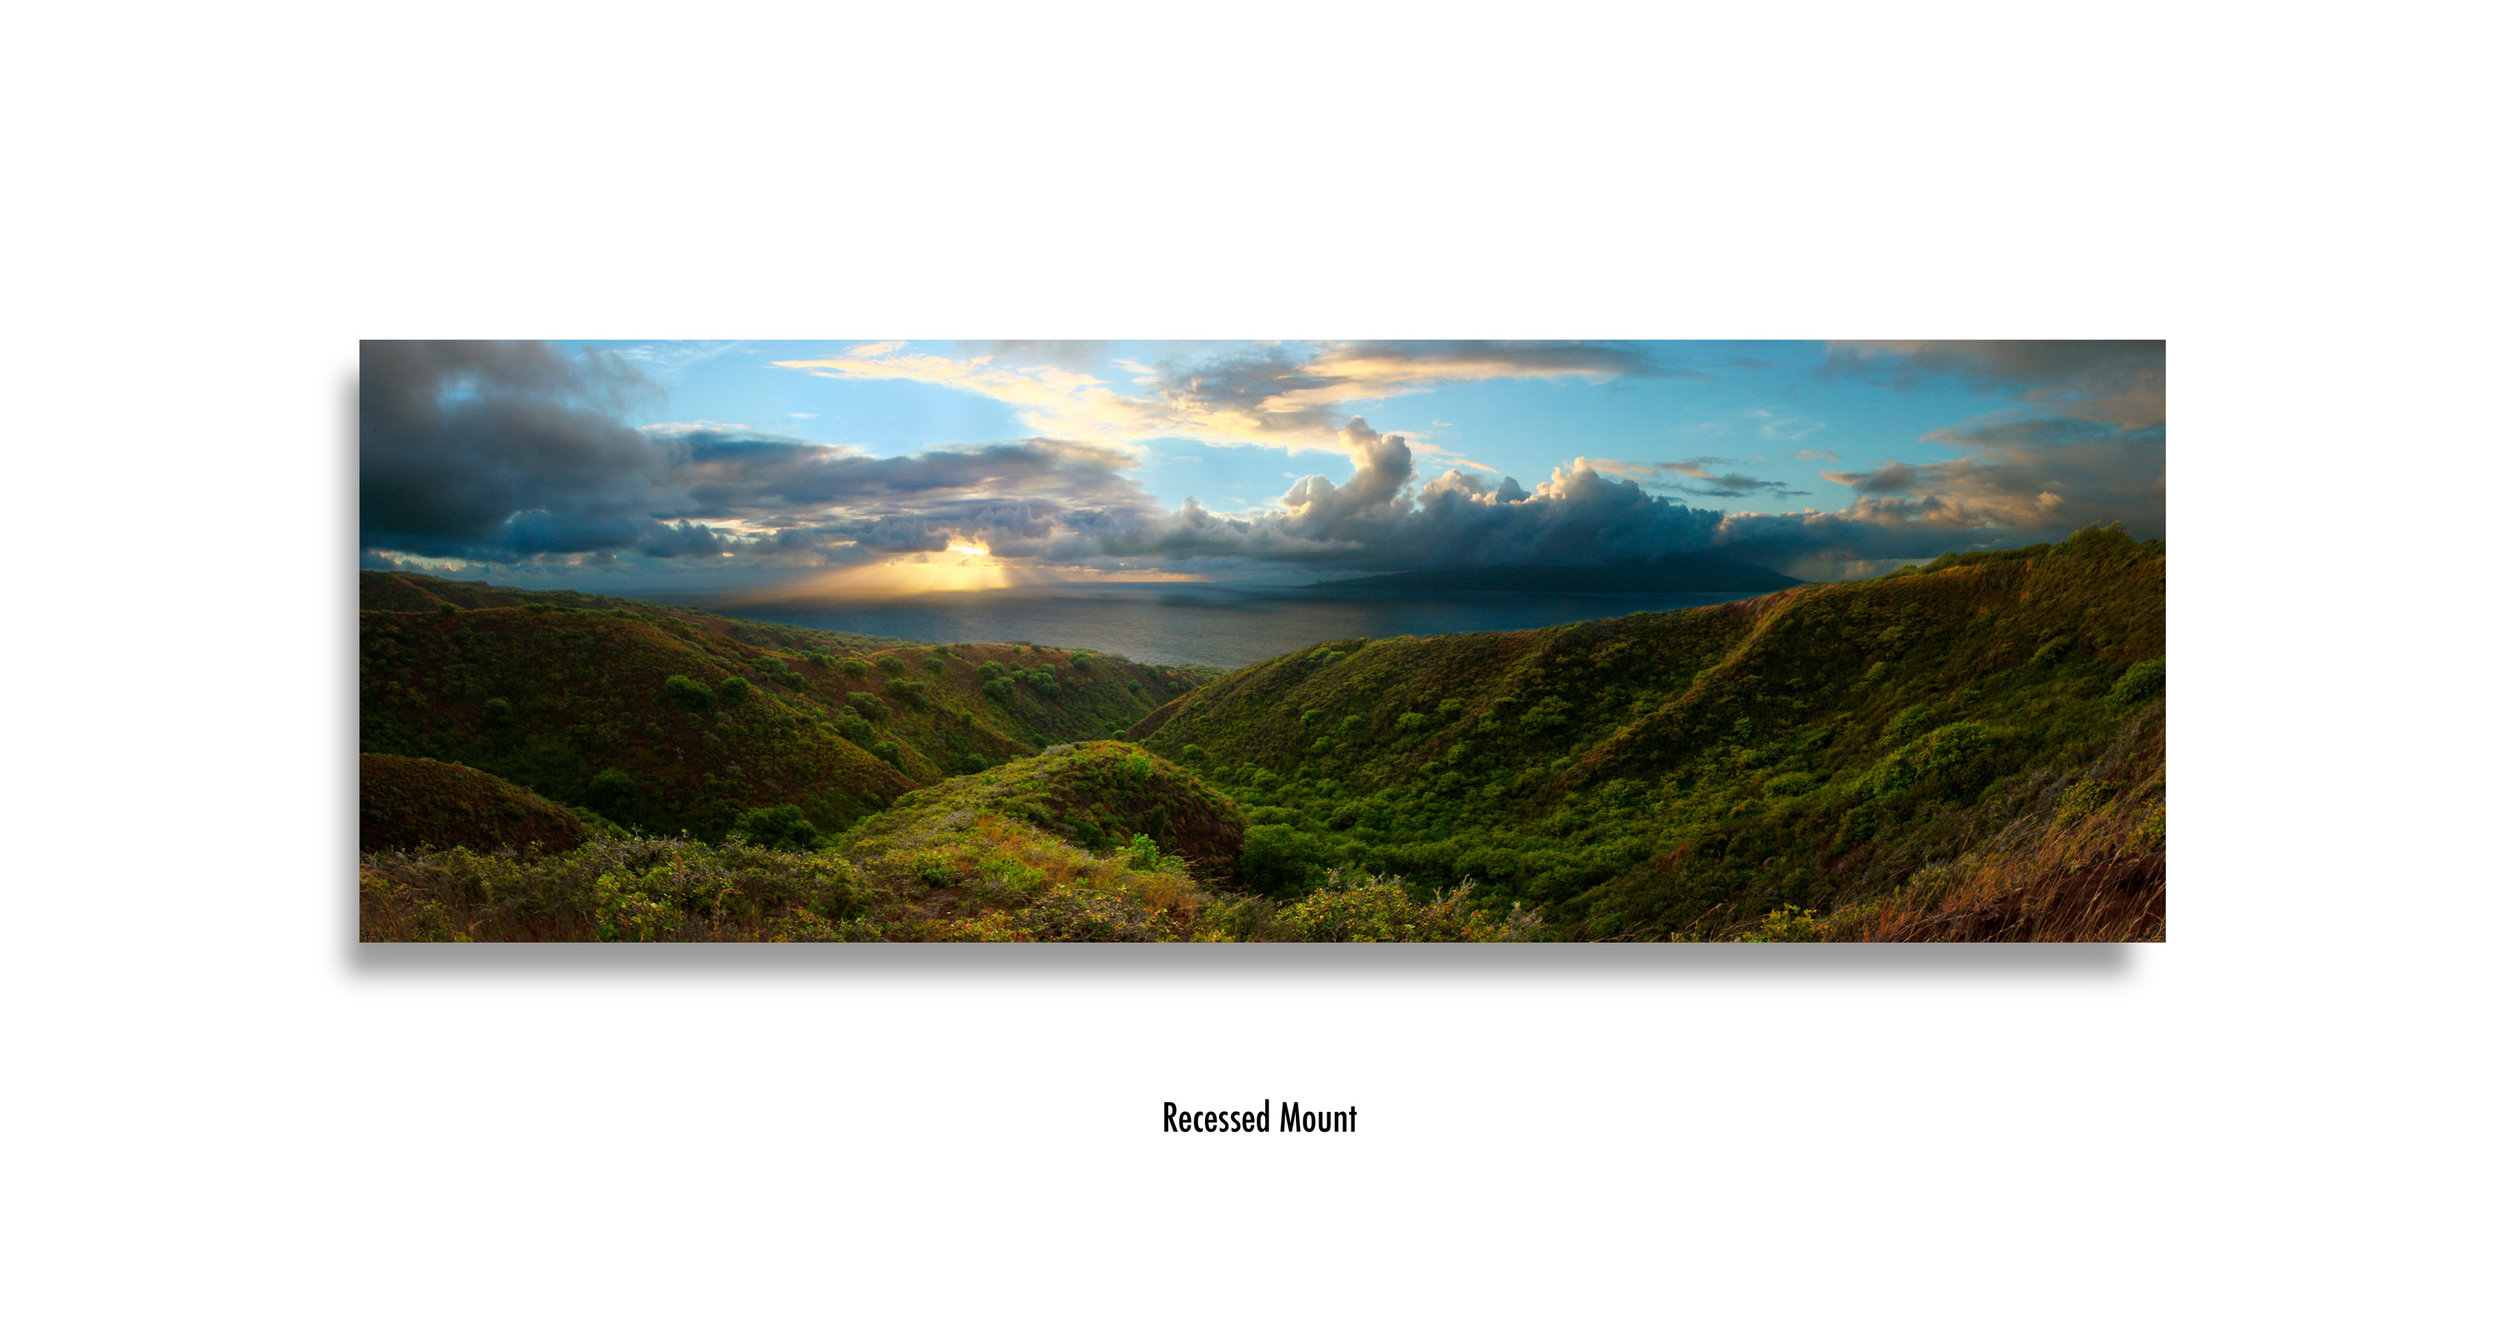 Molokai-Panorama-recessed-mount.jpg